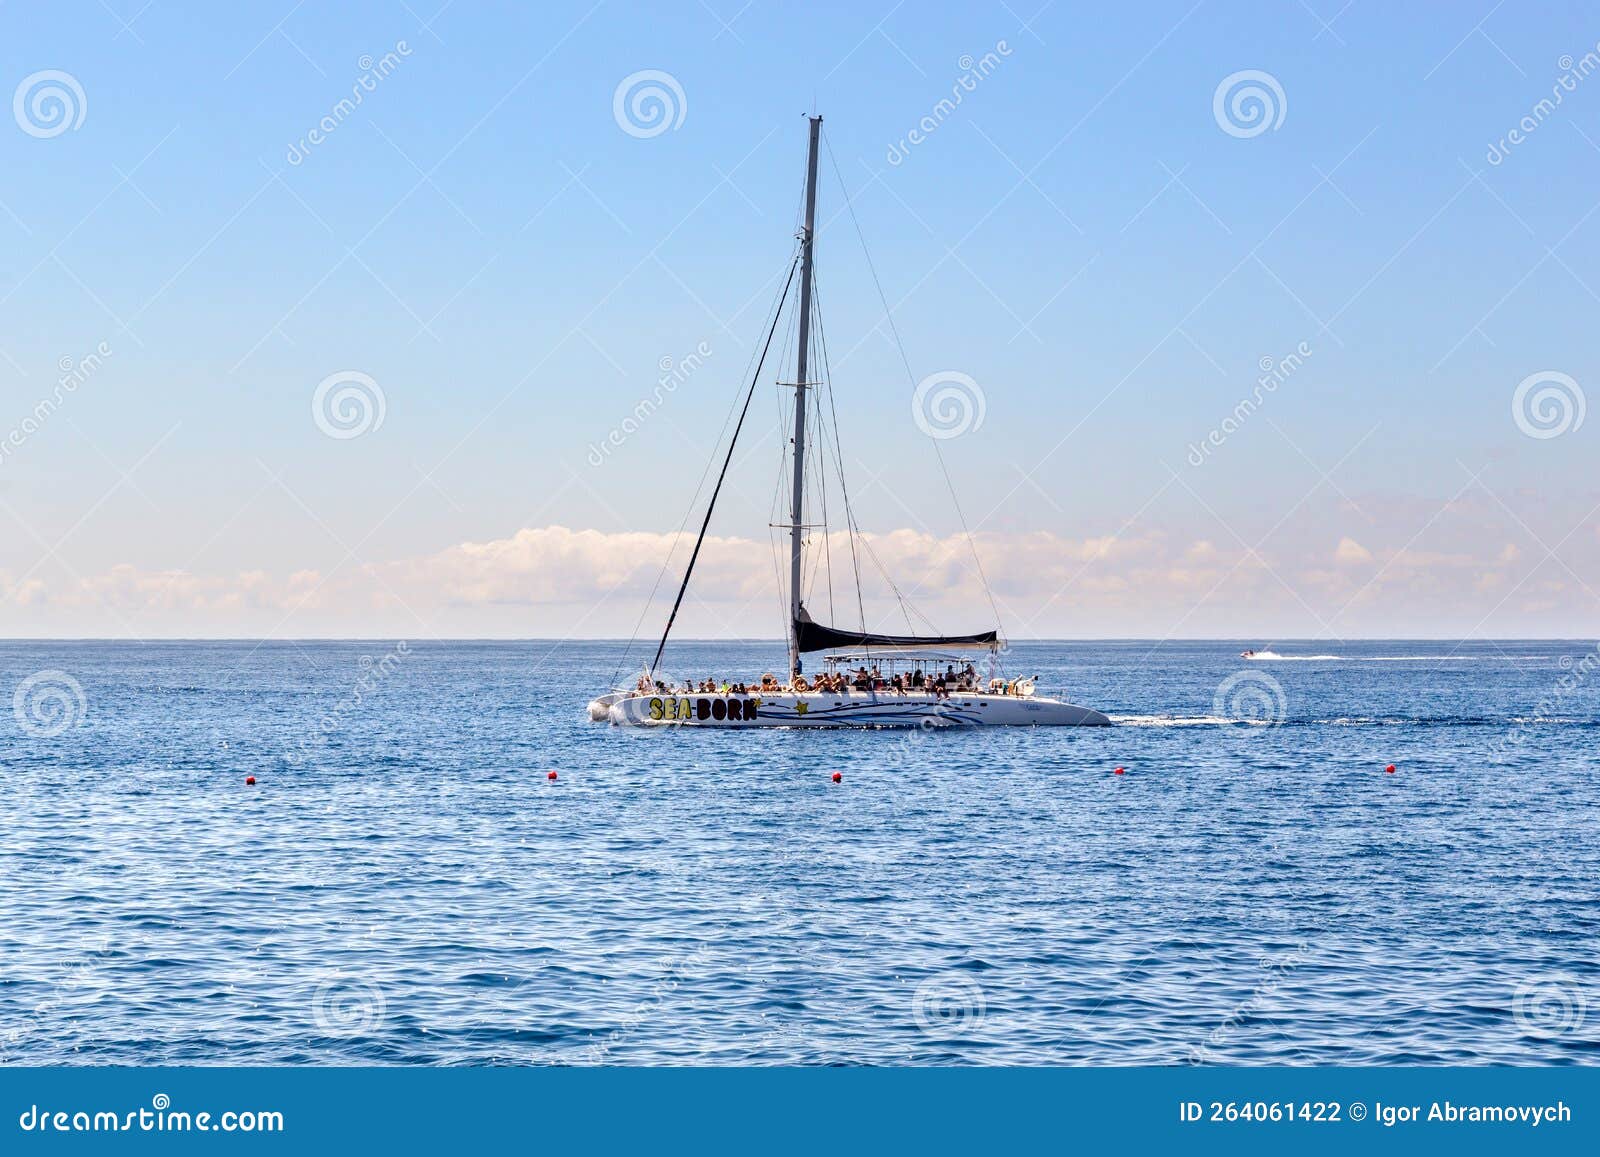 catamaran sea pleasure